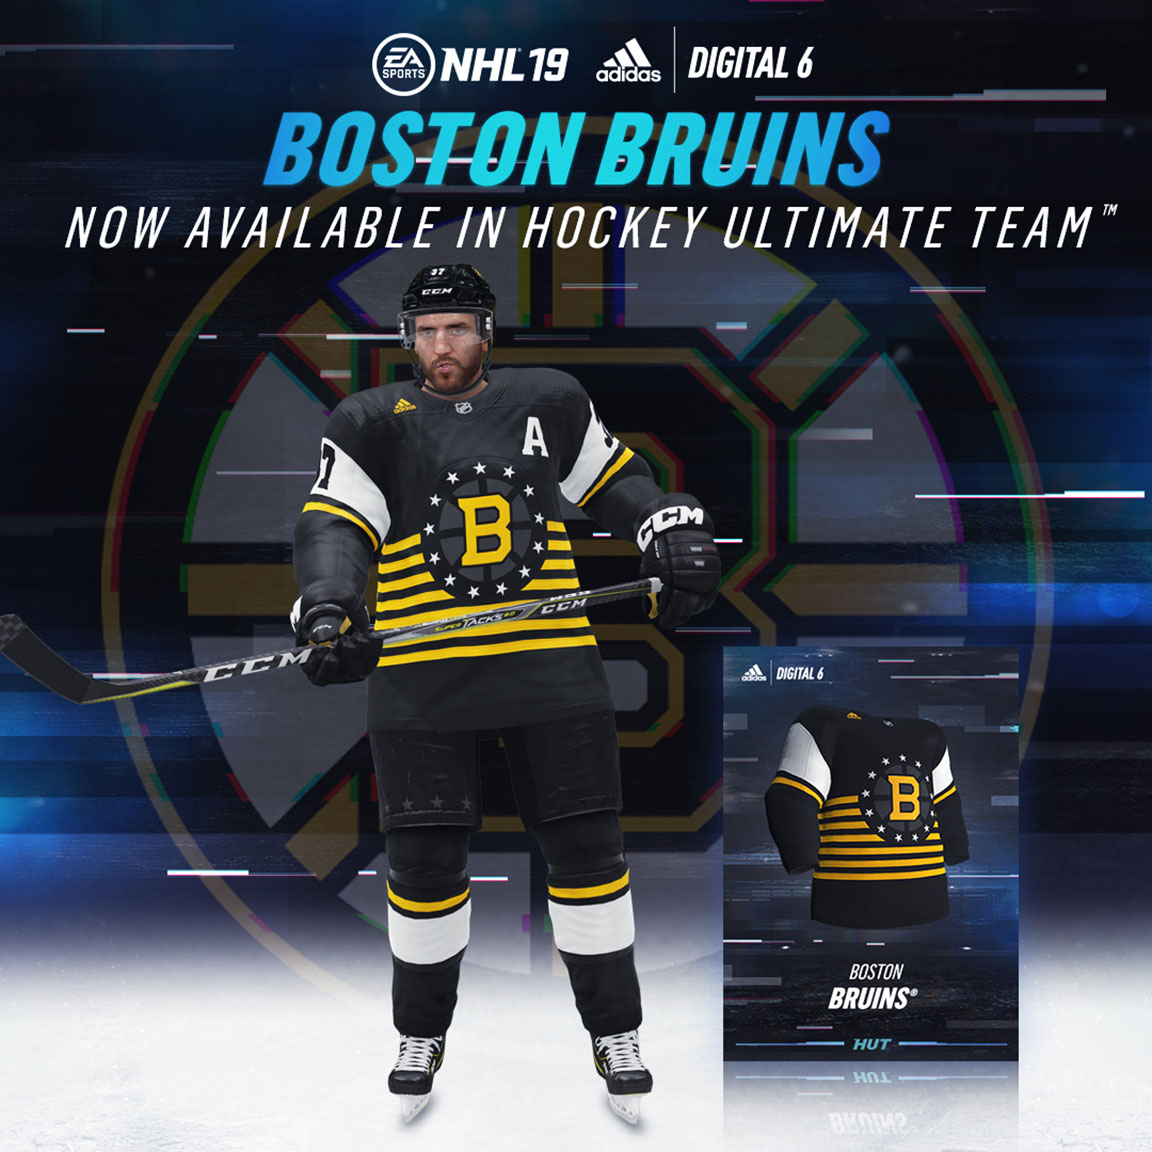 adidasHockey x EA_ Digital6_Bruins_01.jpg